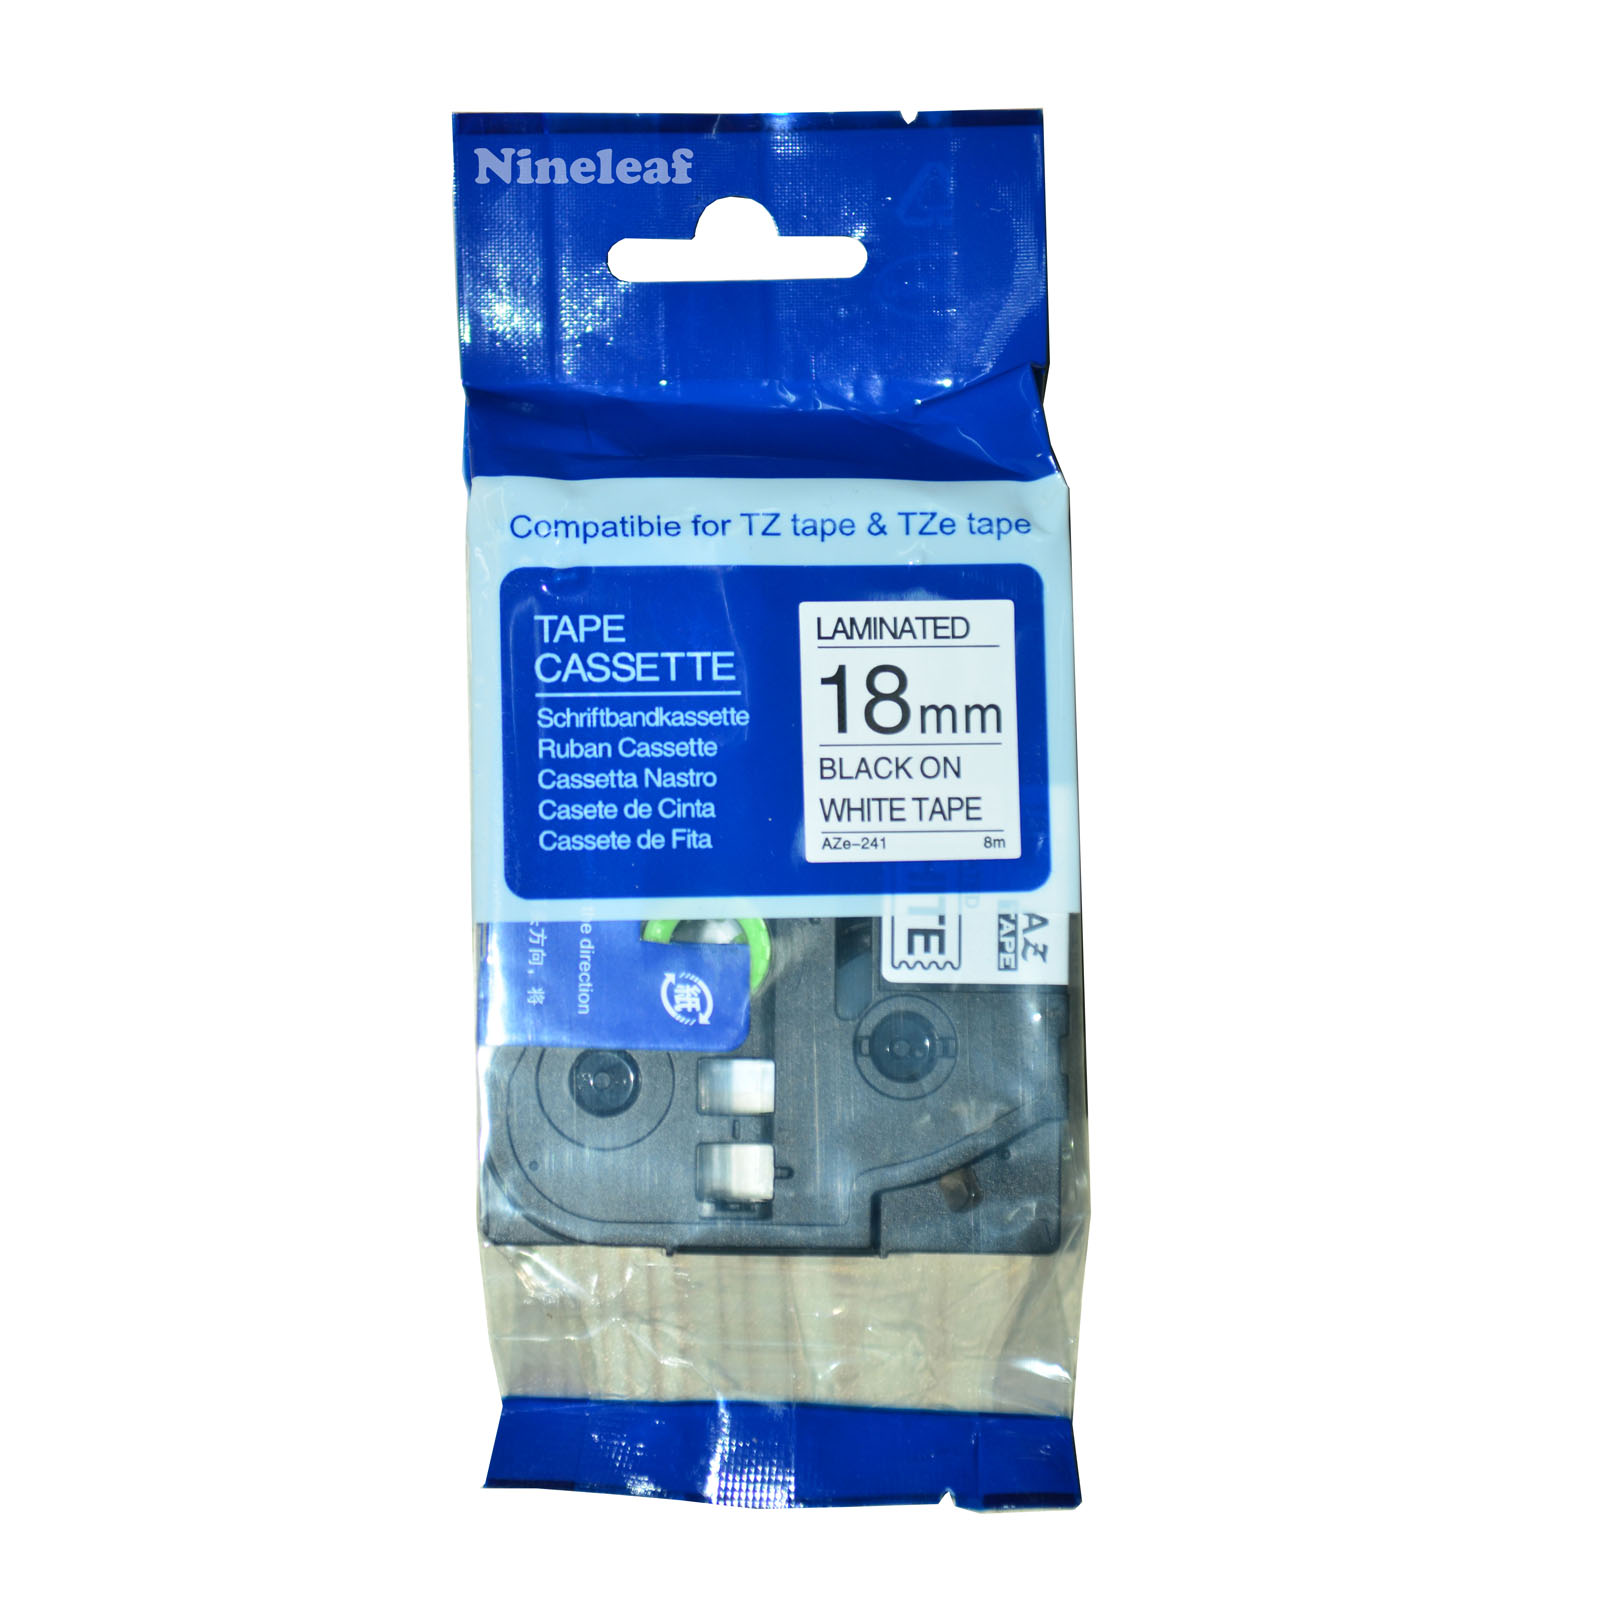 NineLeaf 3 Pack Standard Laminated Self-Adhesive Label Tape Compatible for BrotherTZe241 TZ241 TZ 241 TZe 241 P-Touch PT-9800 PT-9600 PT-7600 PT-2730 PT-2700 18mm x 8m Black on White